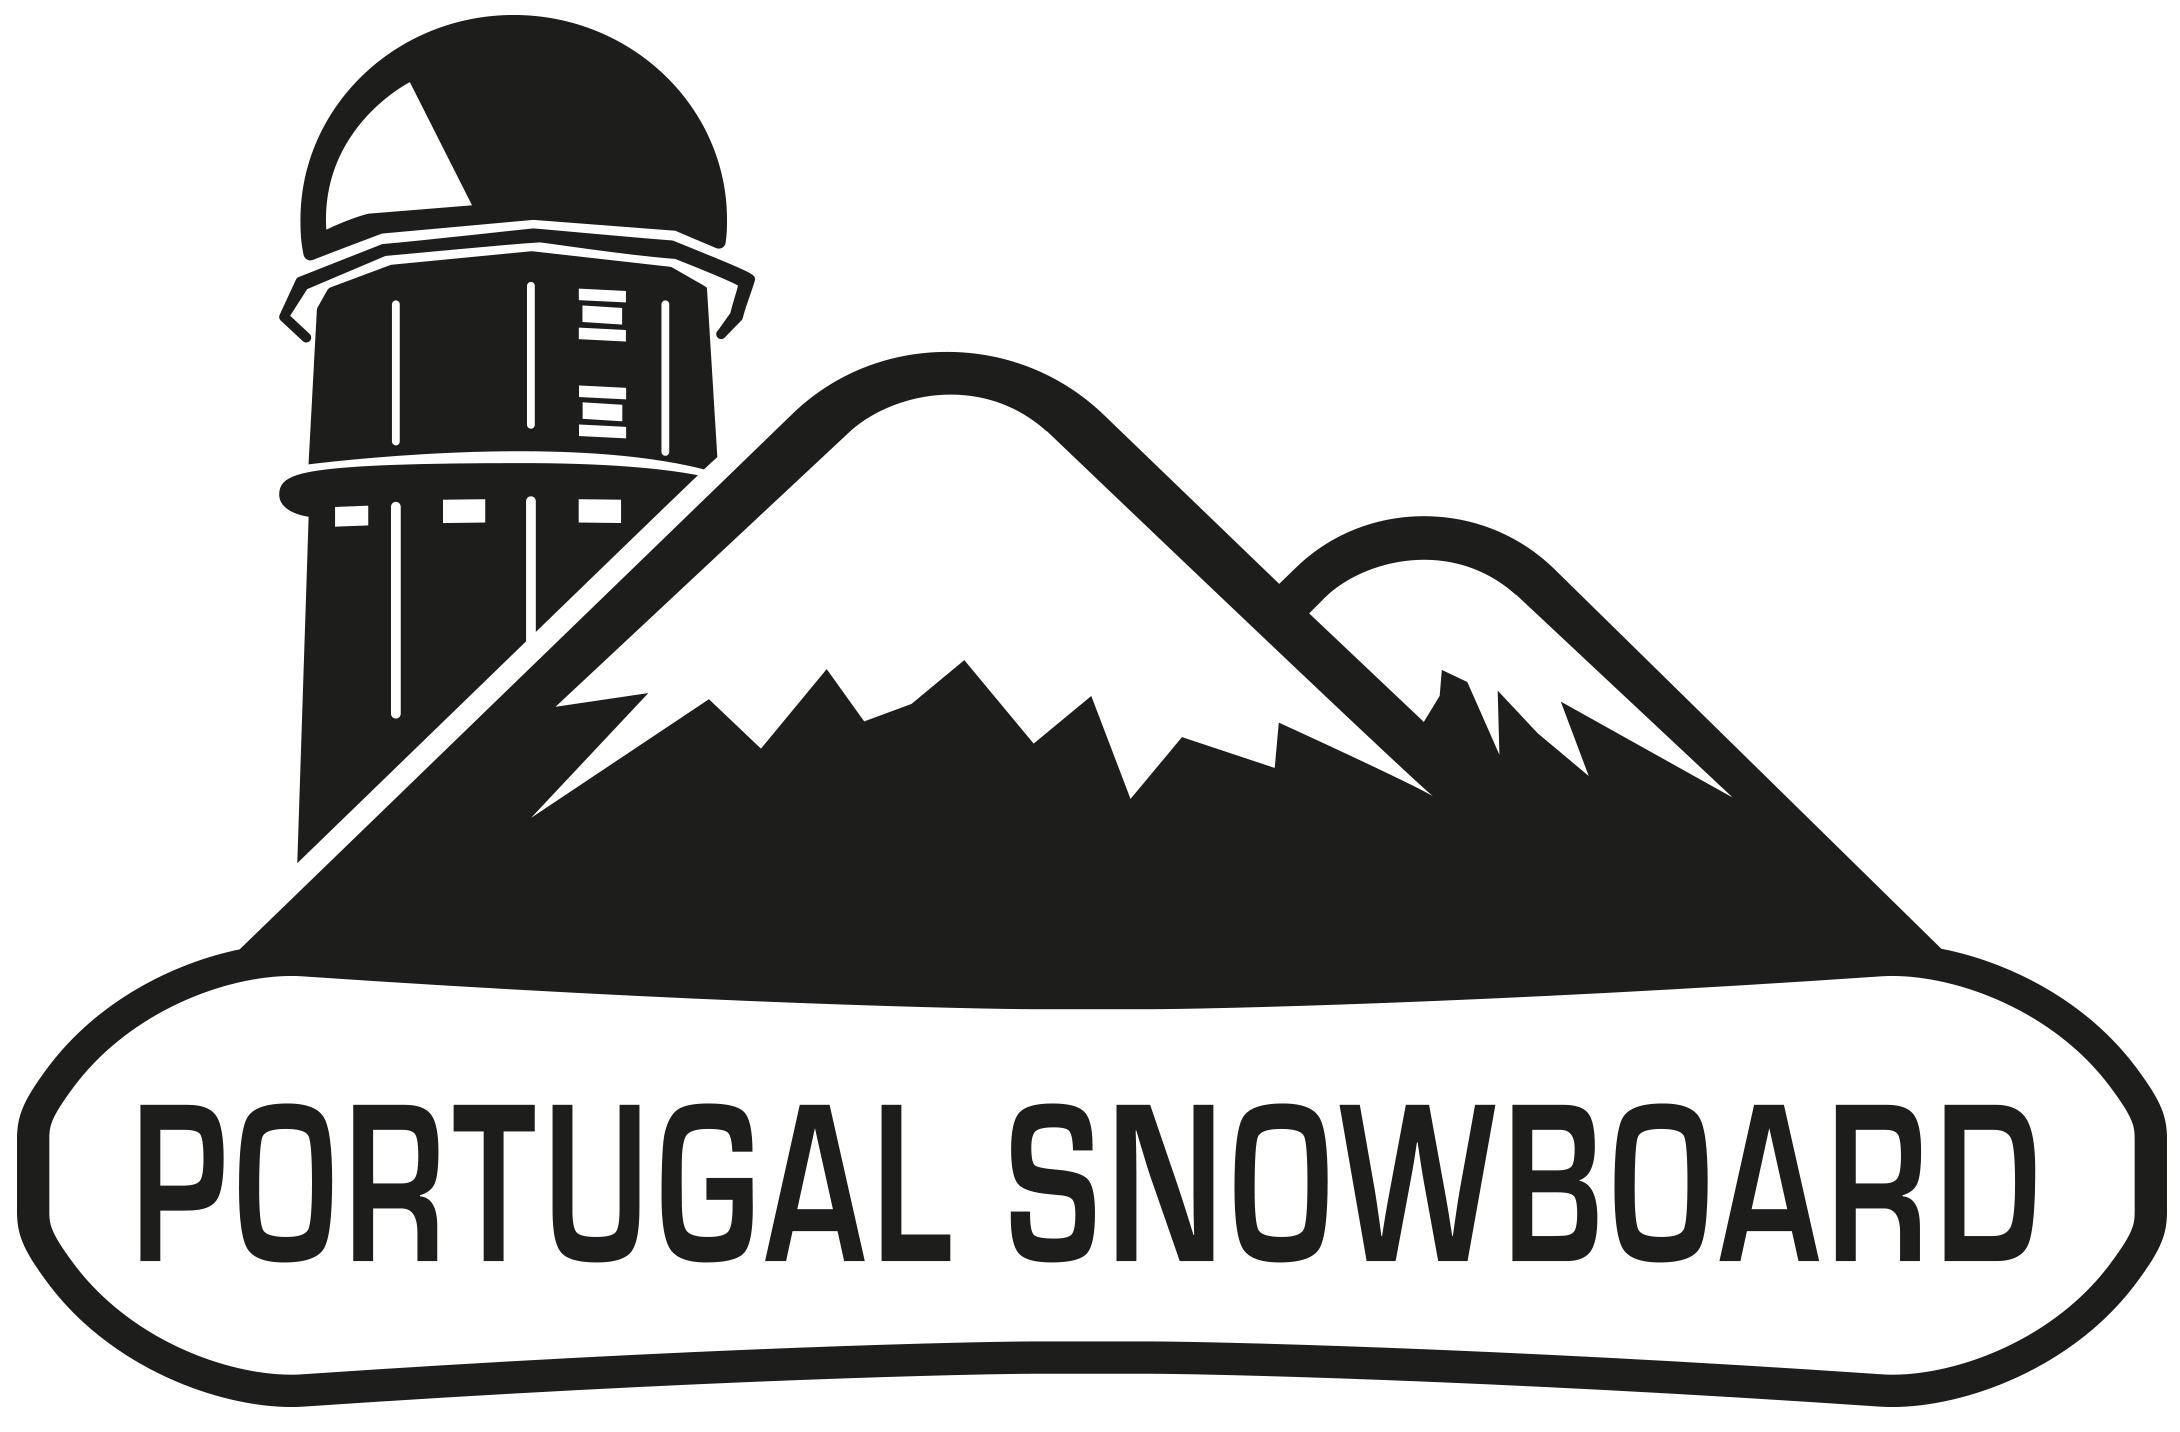 PORTUGAL SNOWBOARD